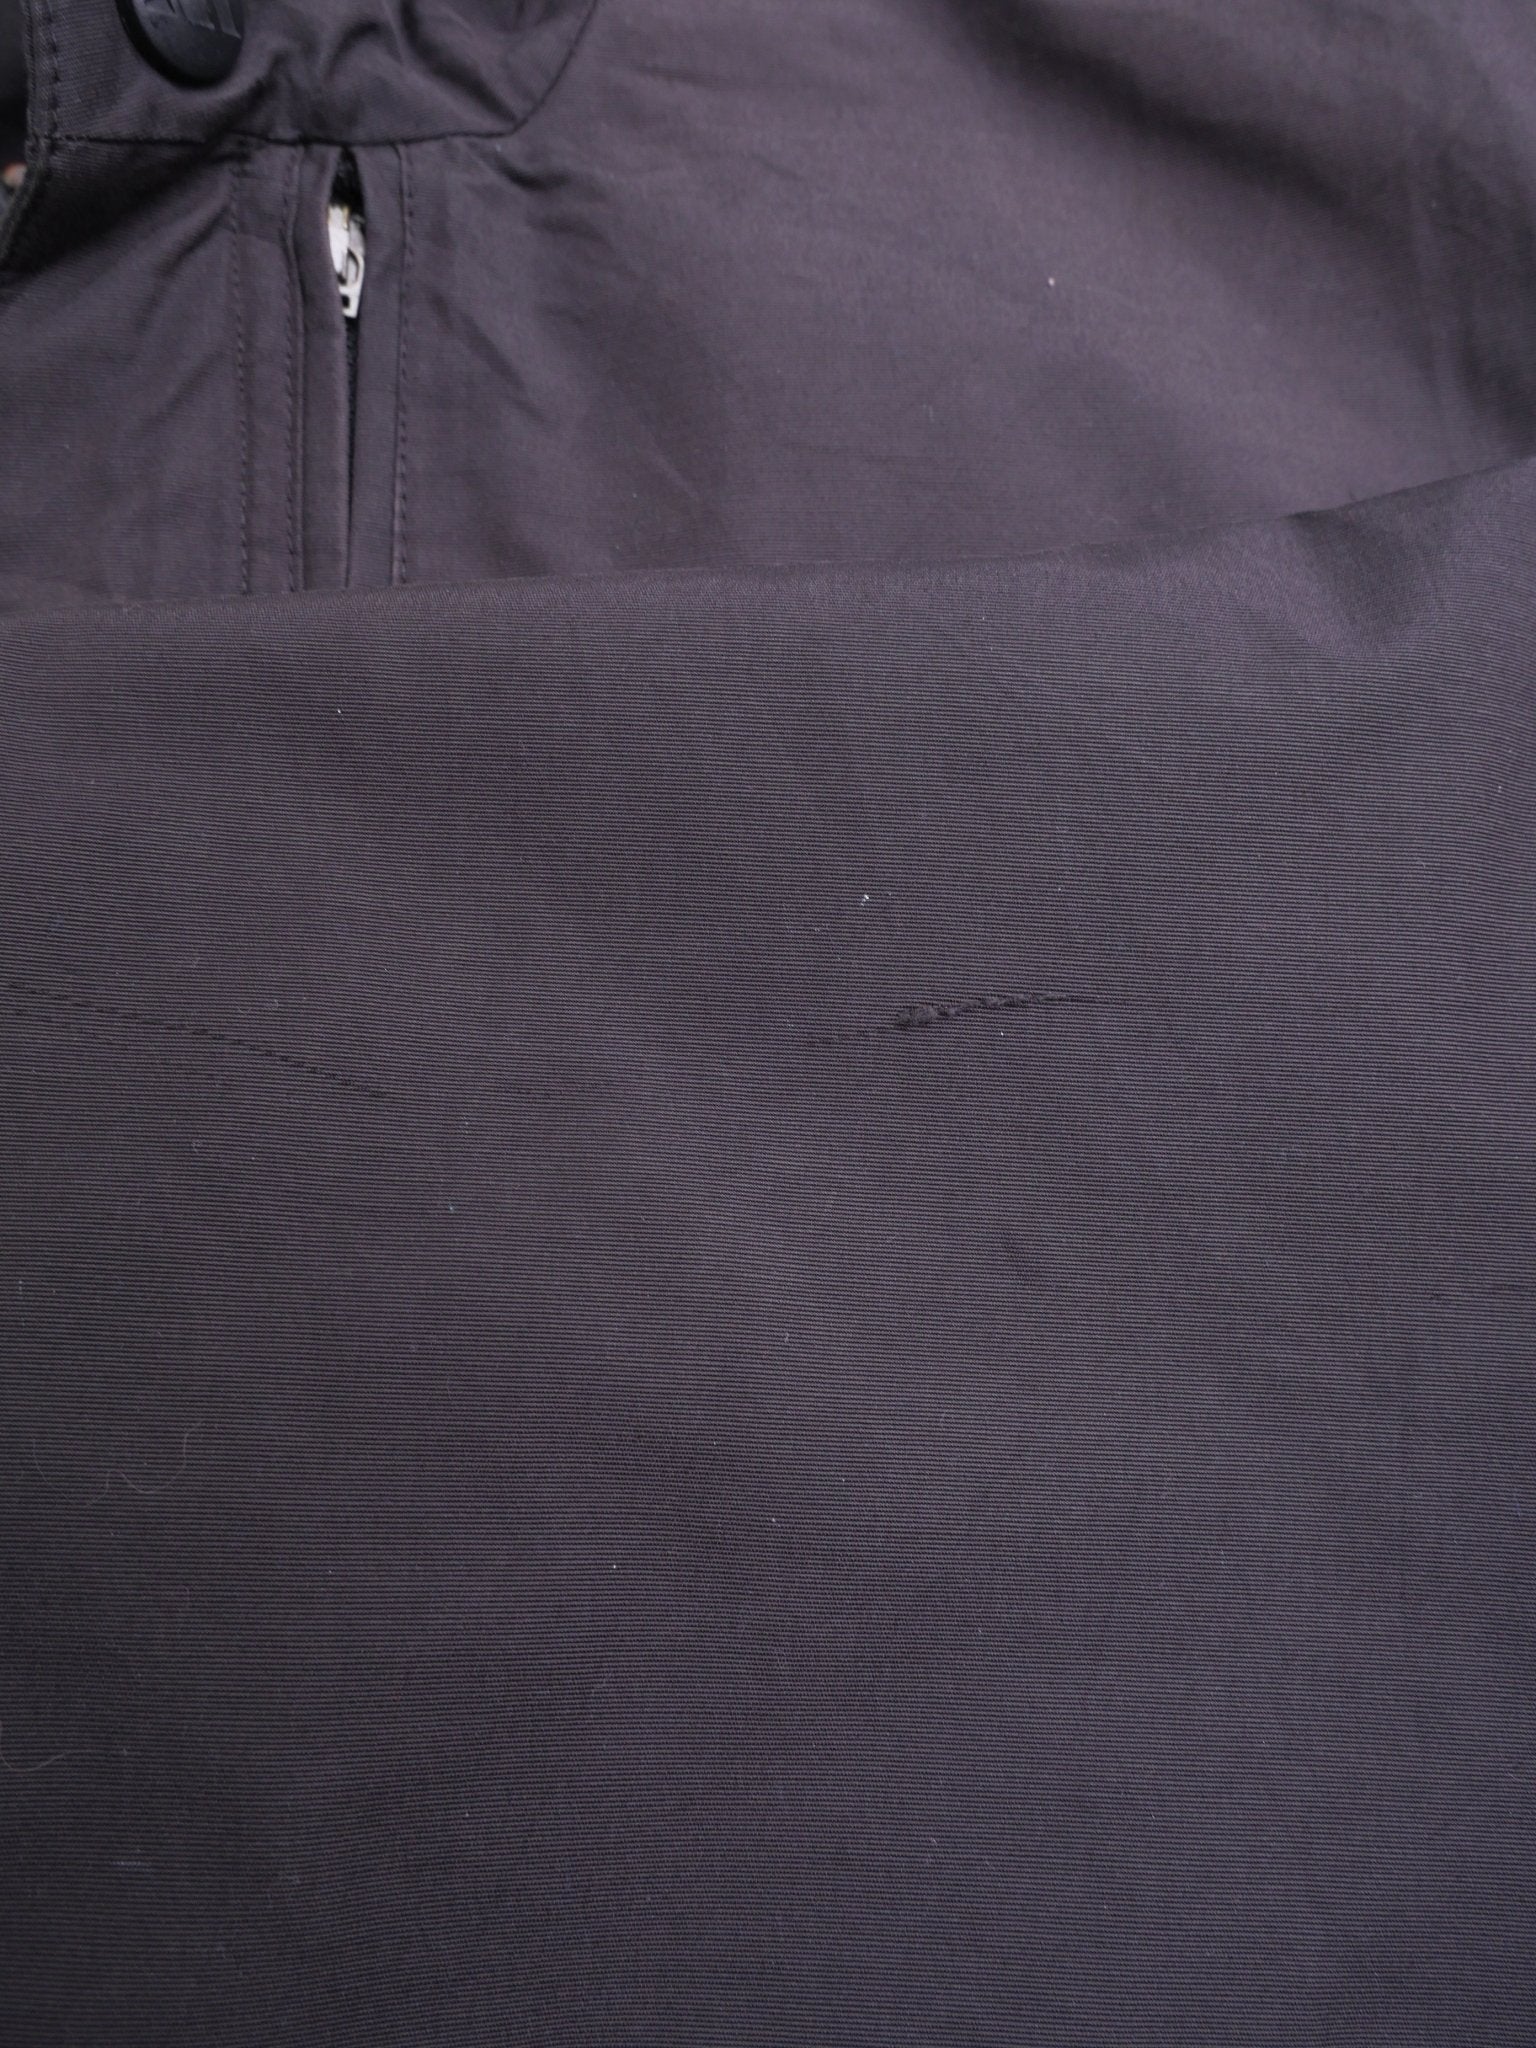 Adidas embroidered Logo black Jacke - Peeces